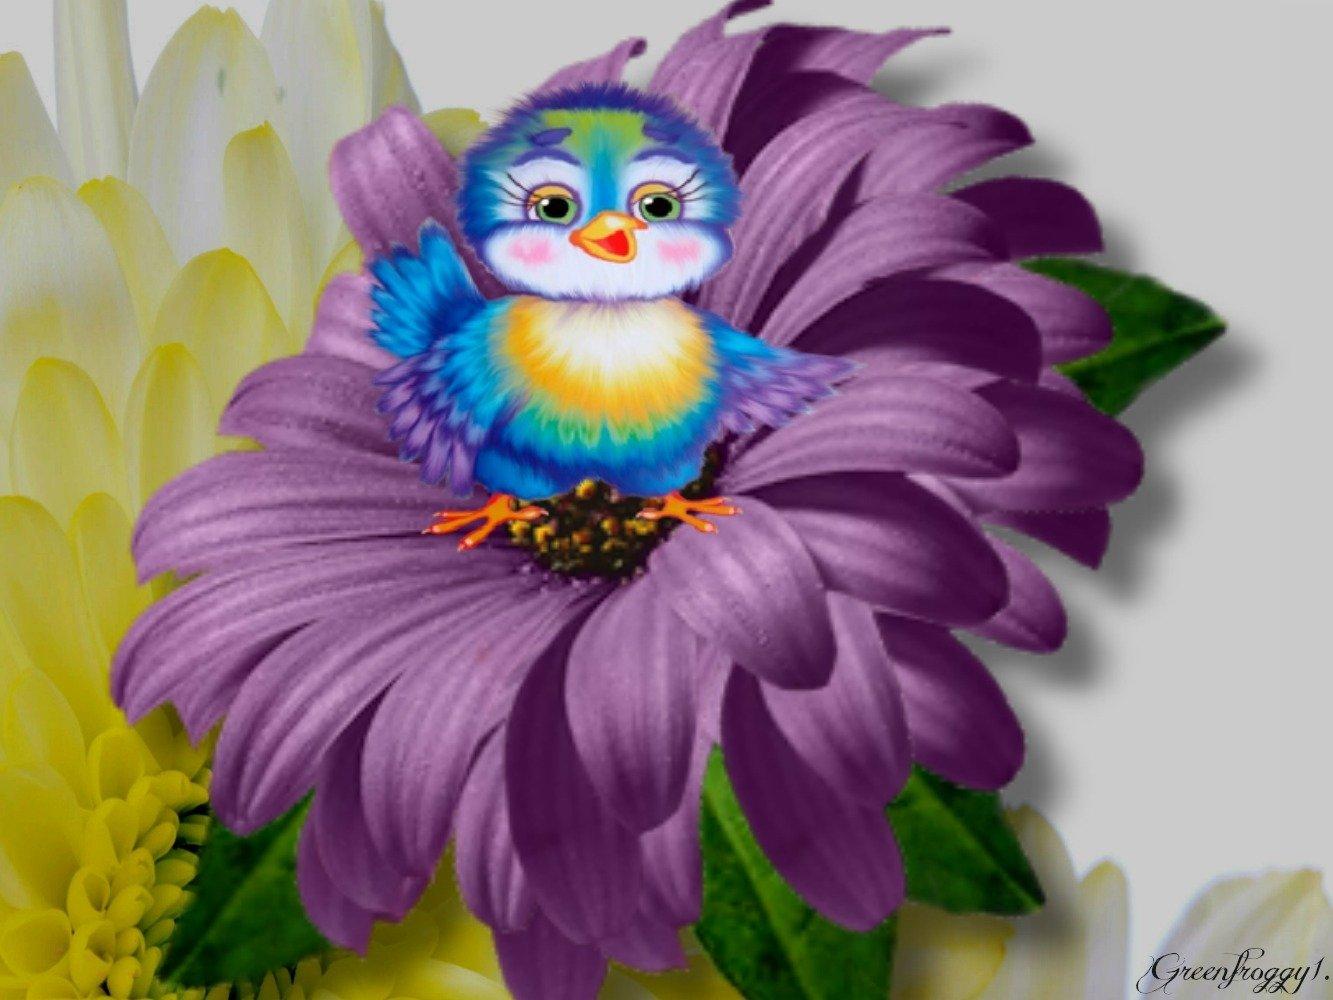 LITTLE BLUE BIRD Wallpaper and Background Imagex1000